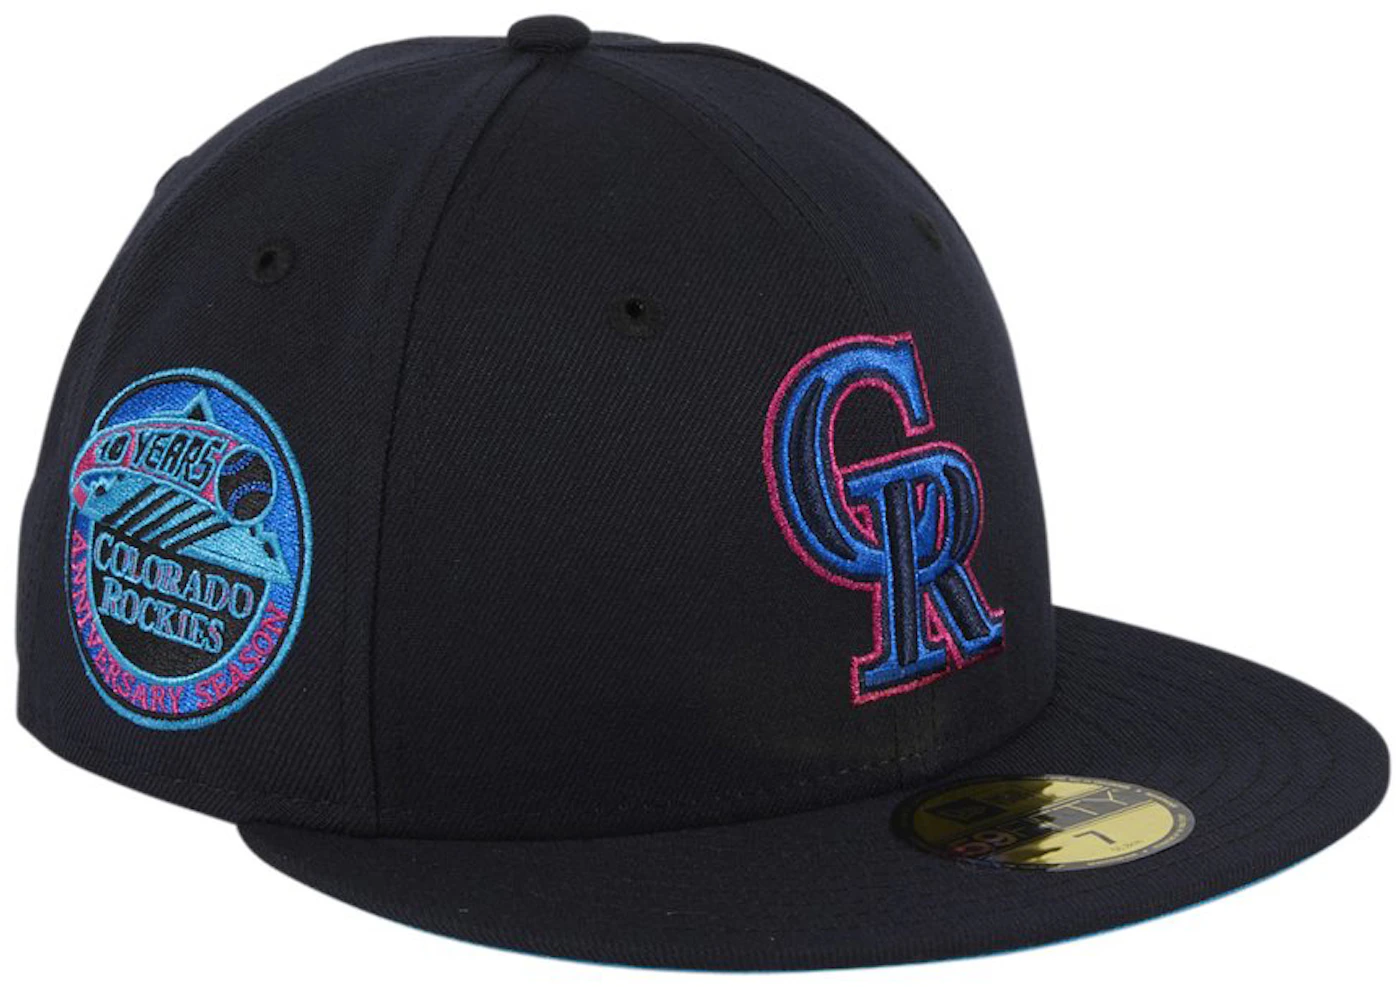 Vintage Colorado Rockies Hat New Era MLB Fitted Heritage Pin